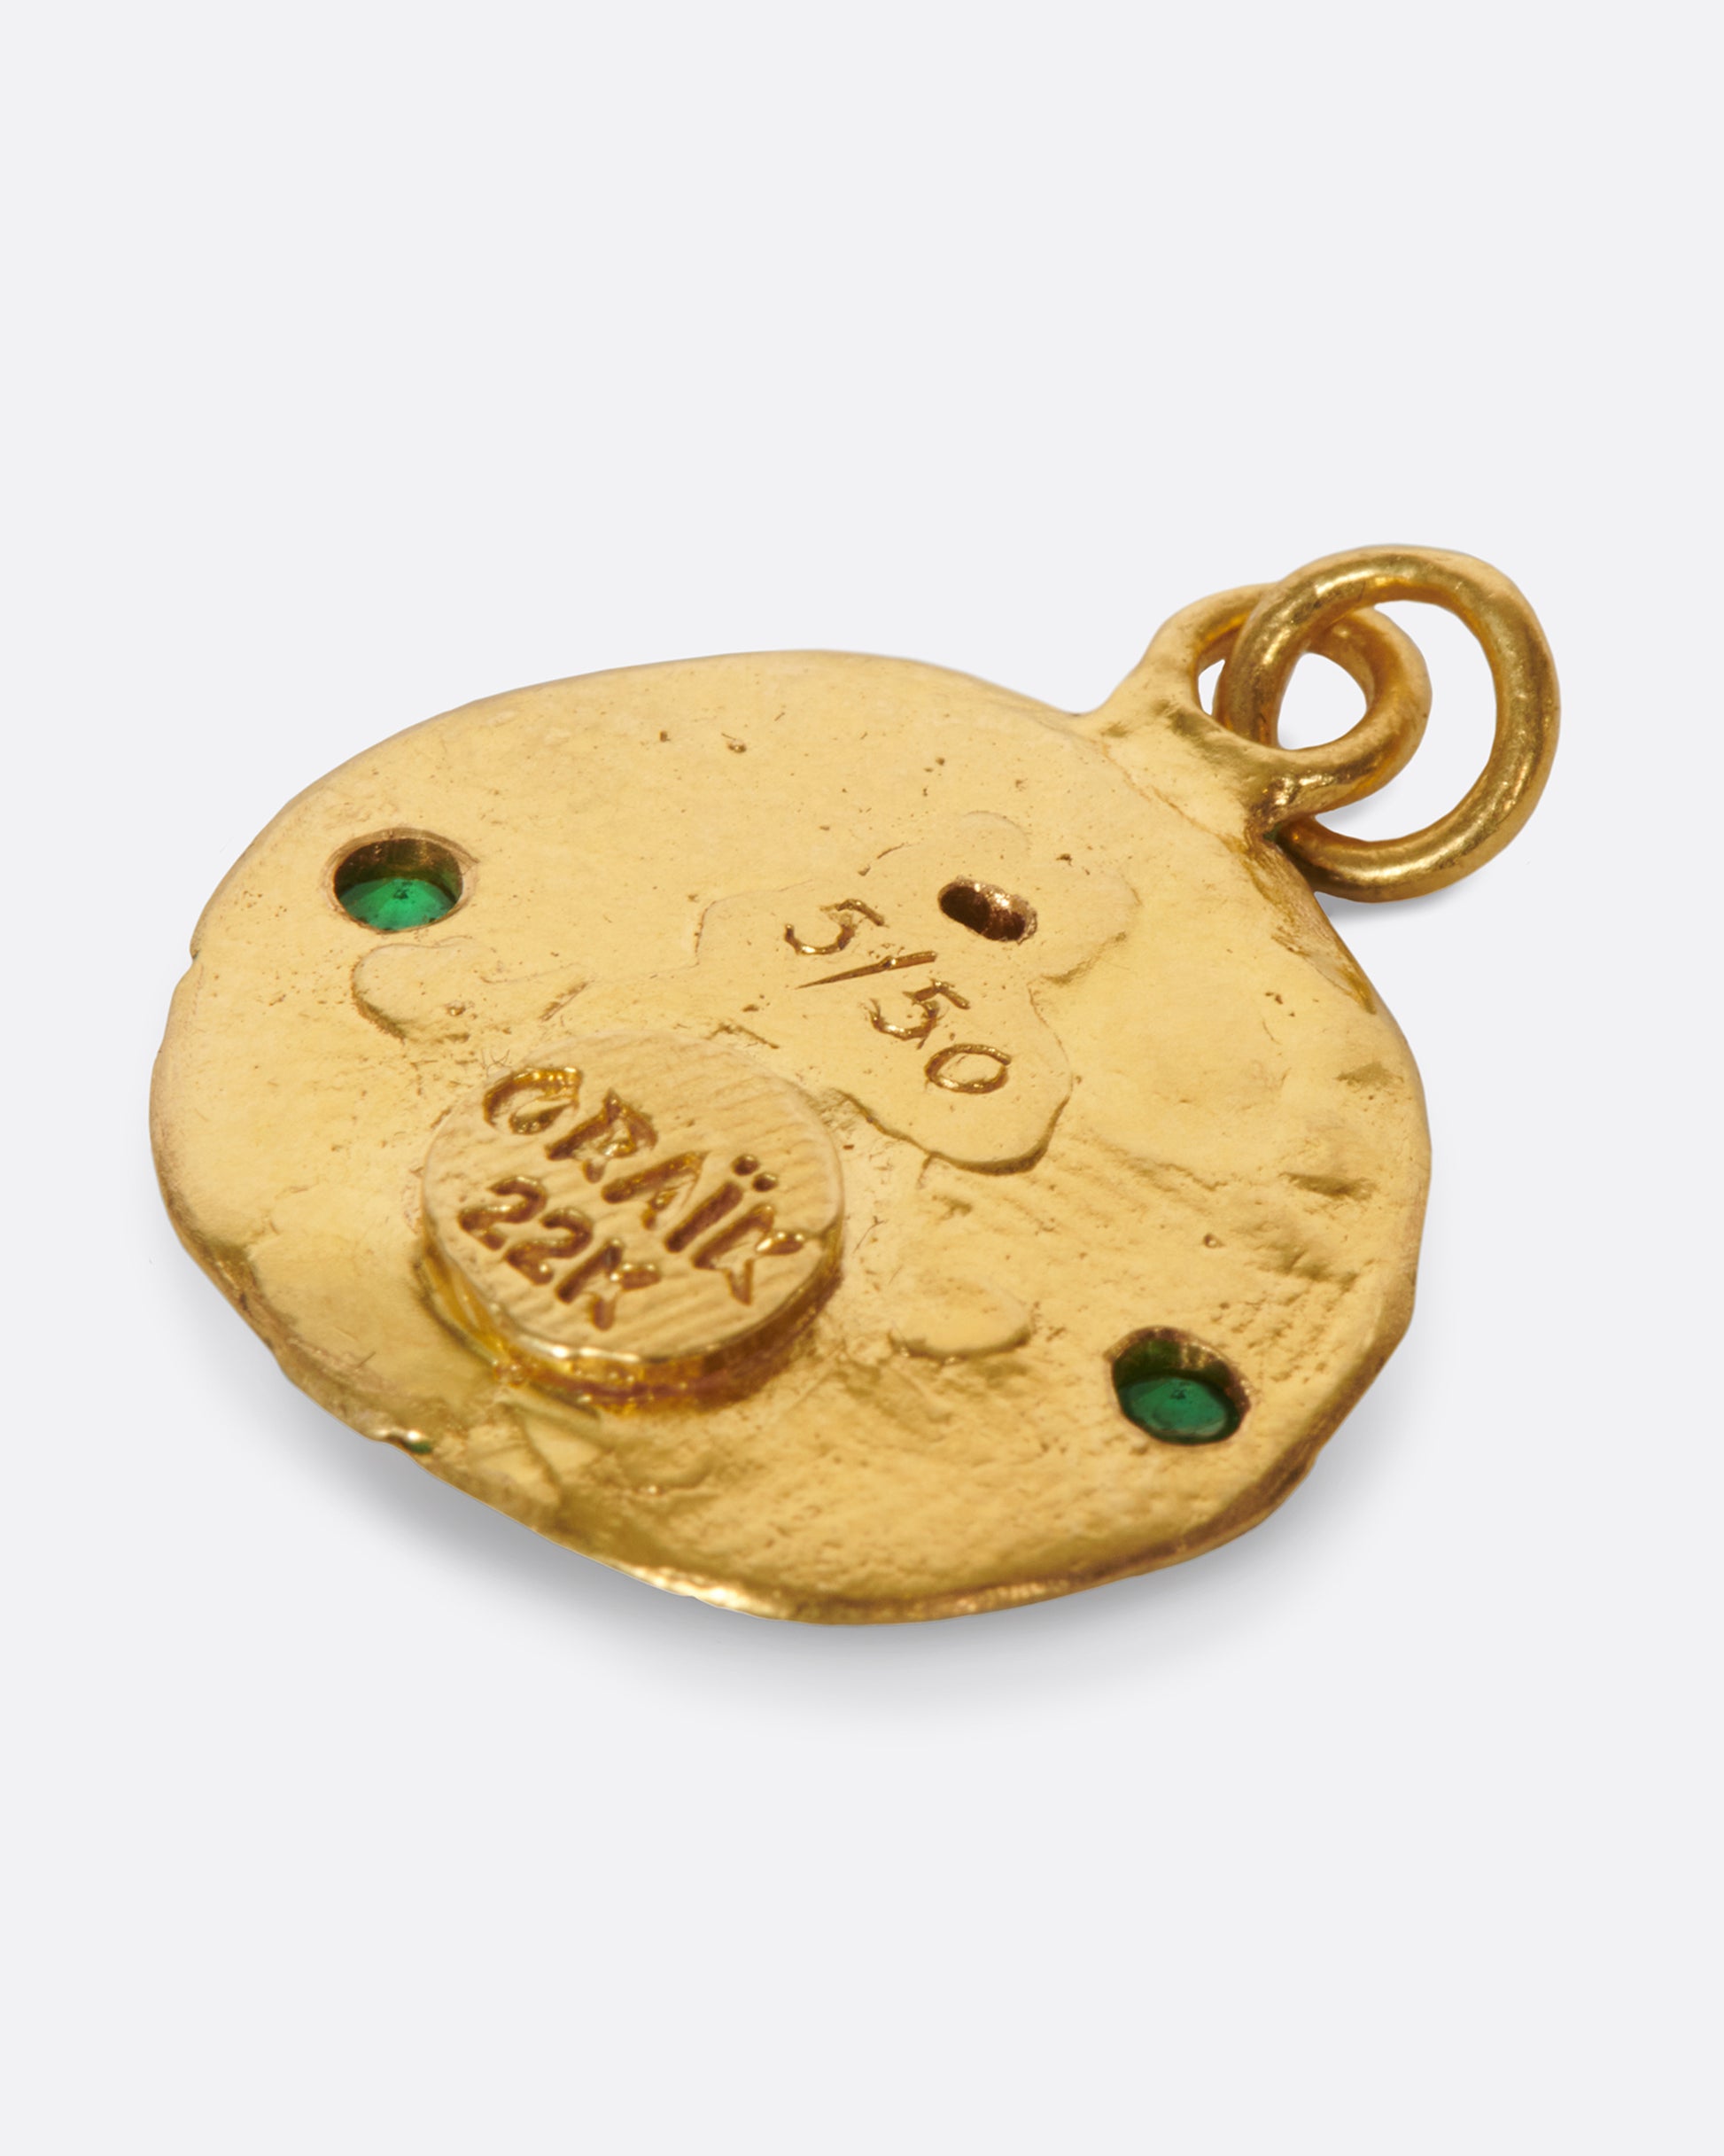 A round, high karat gold medallion pendant featuring a Virgo icon holding two tsavorite garnets.